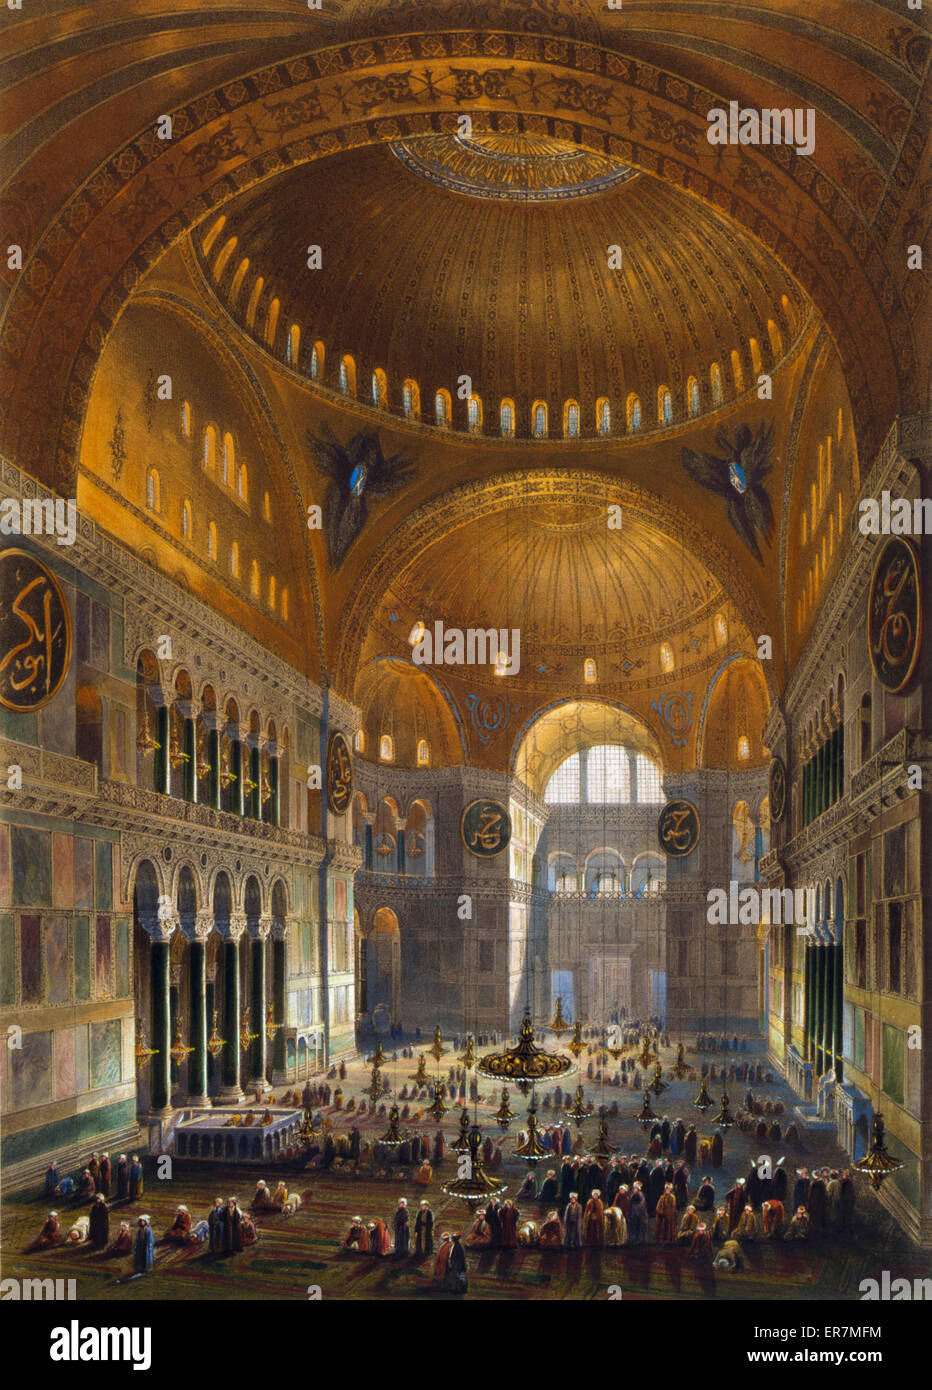 Print shows nave of Ayasofya Mosque Stock Photo